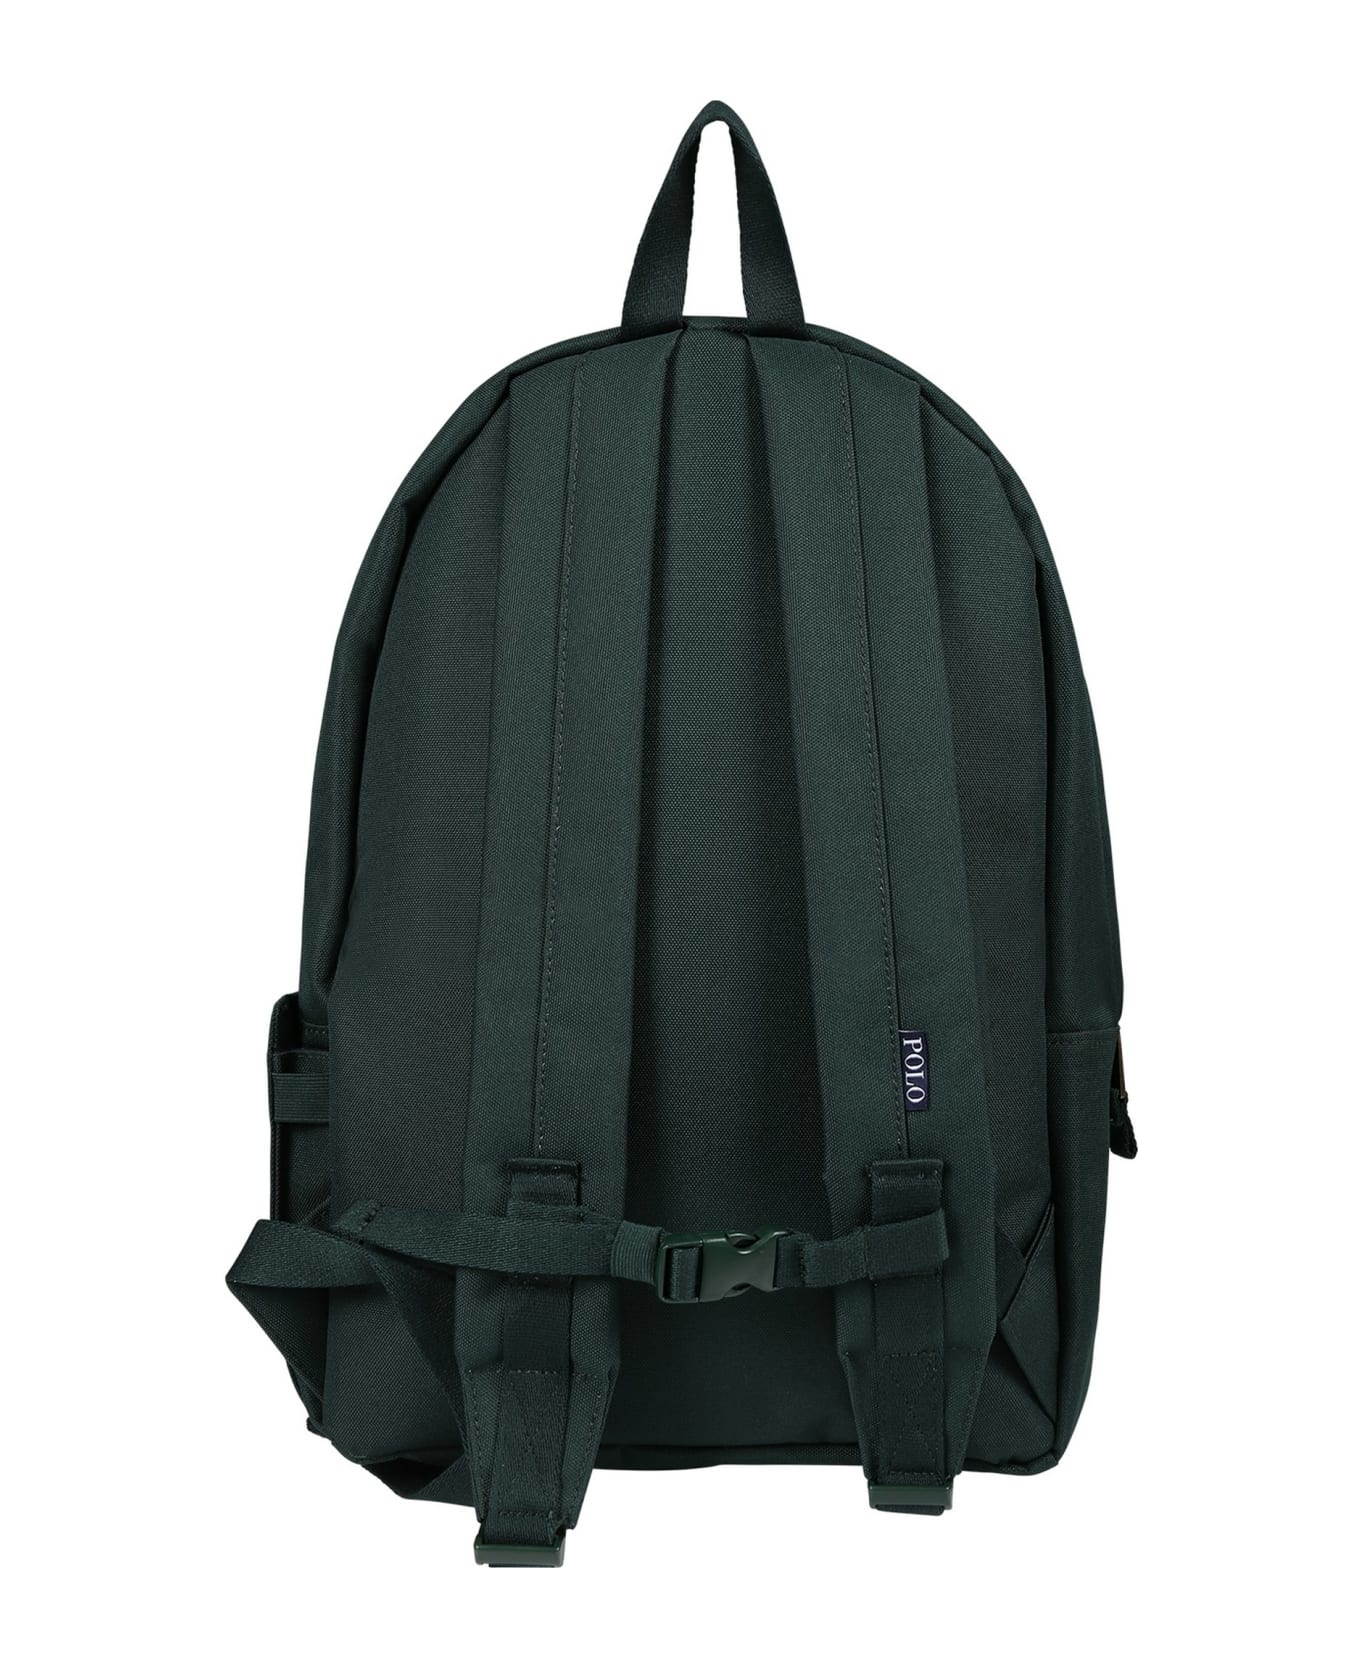 Ralph Lauren Green Backpack For Kids - Green アクセサリー＆ギフト